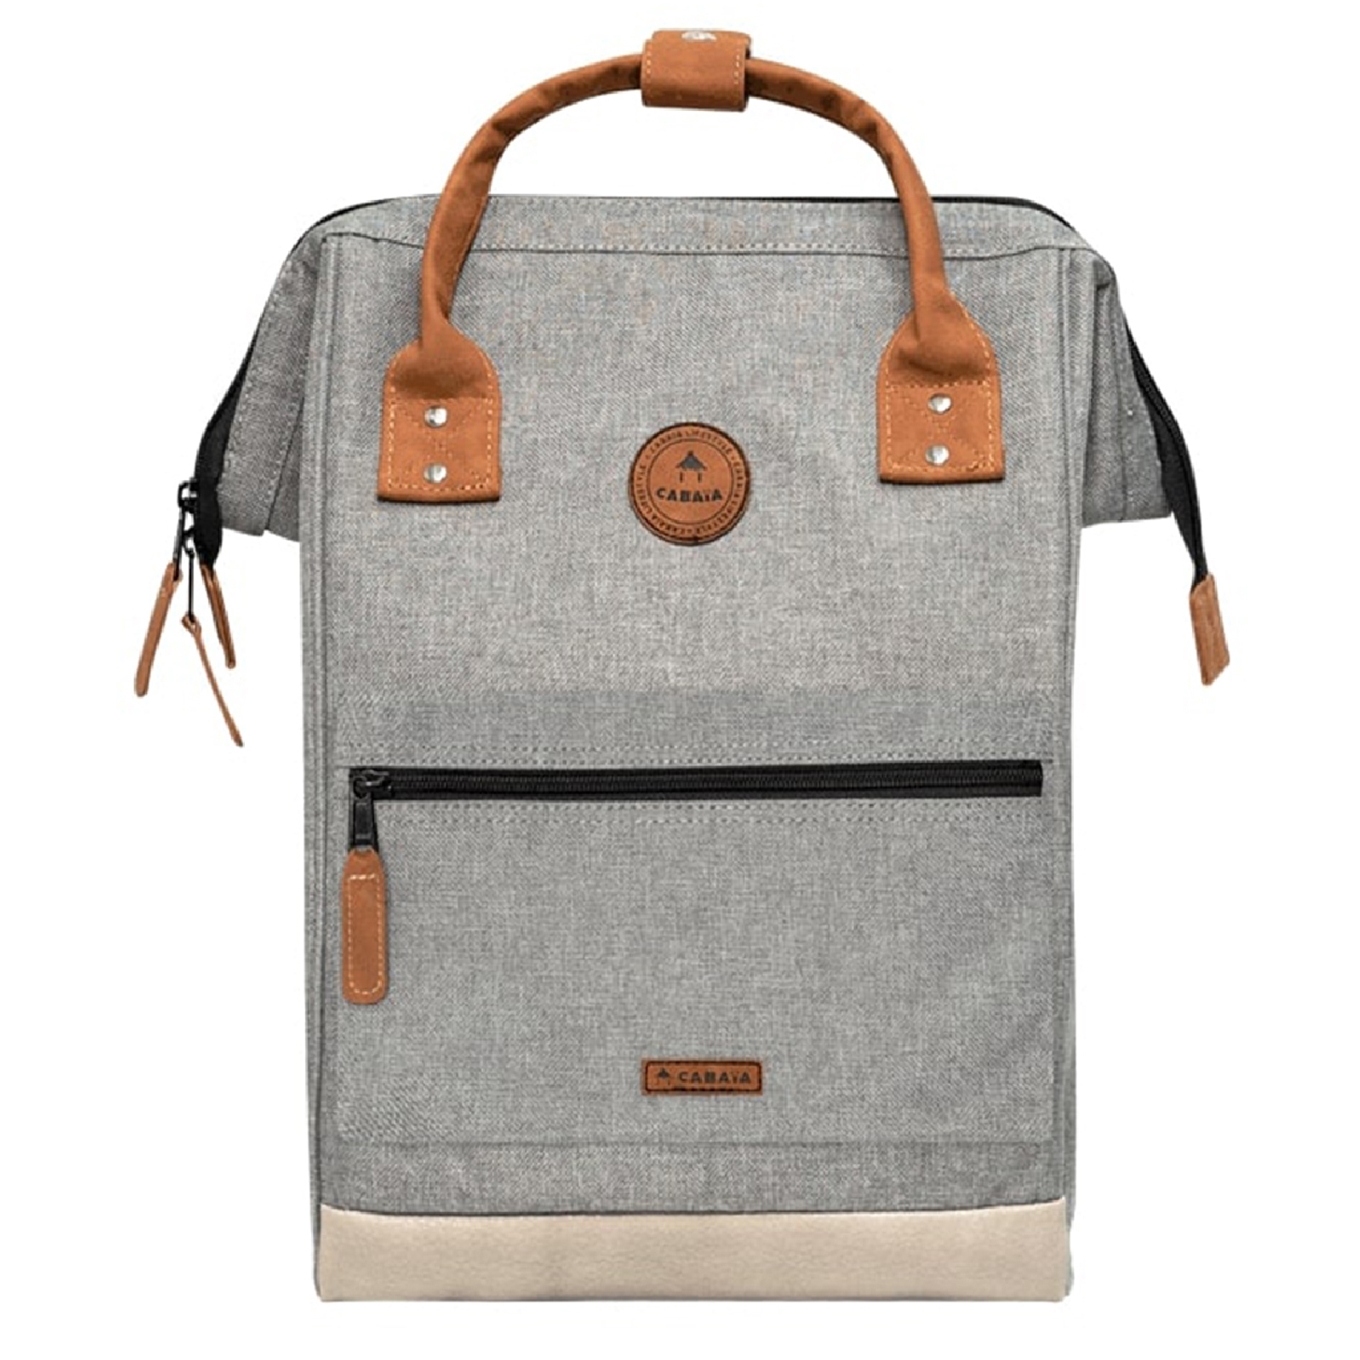 Cabaia Adventurer Medium Bag new york backpack